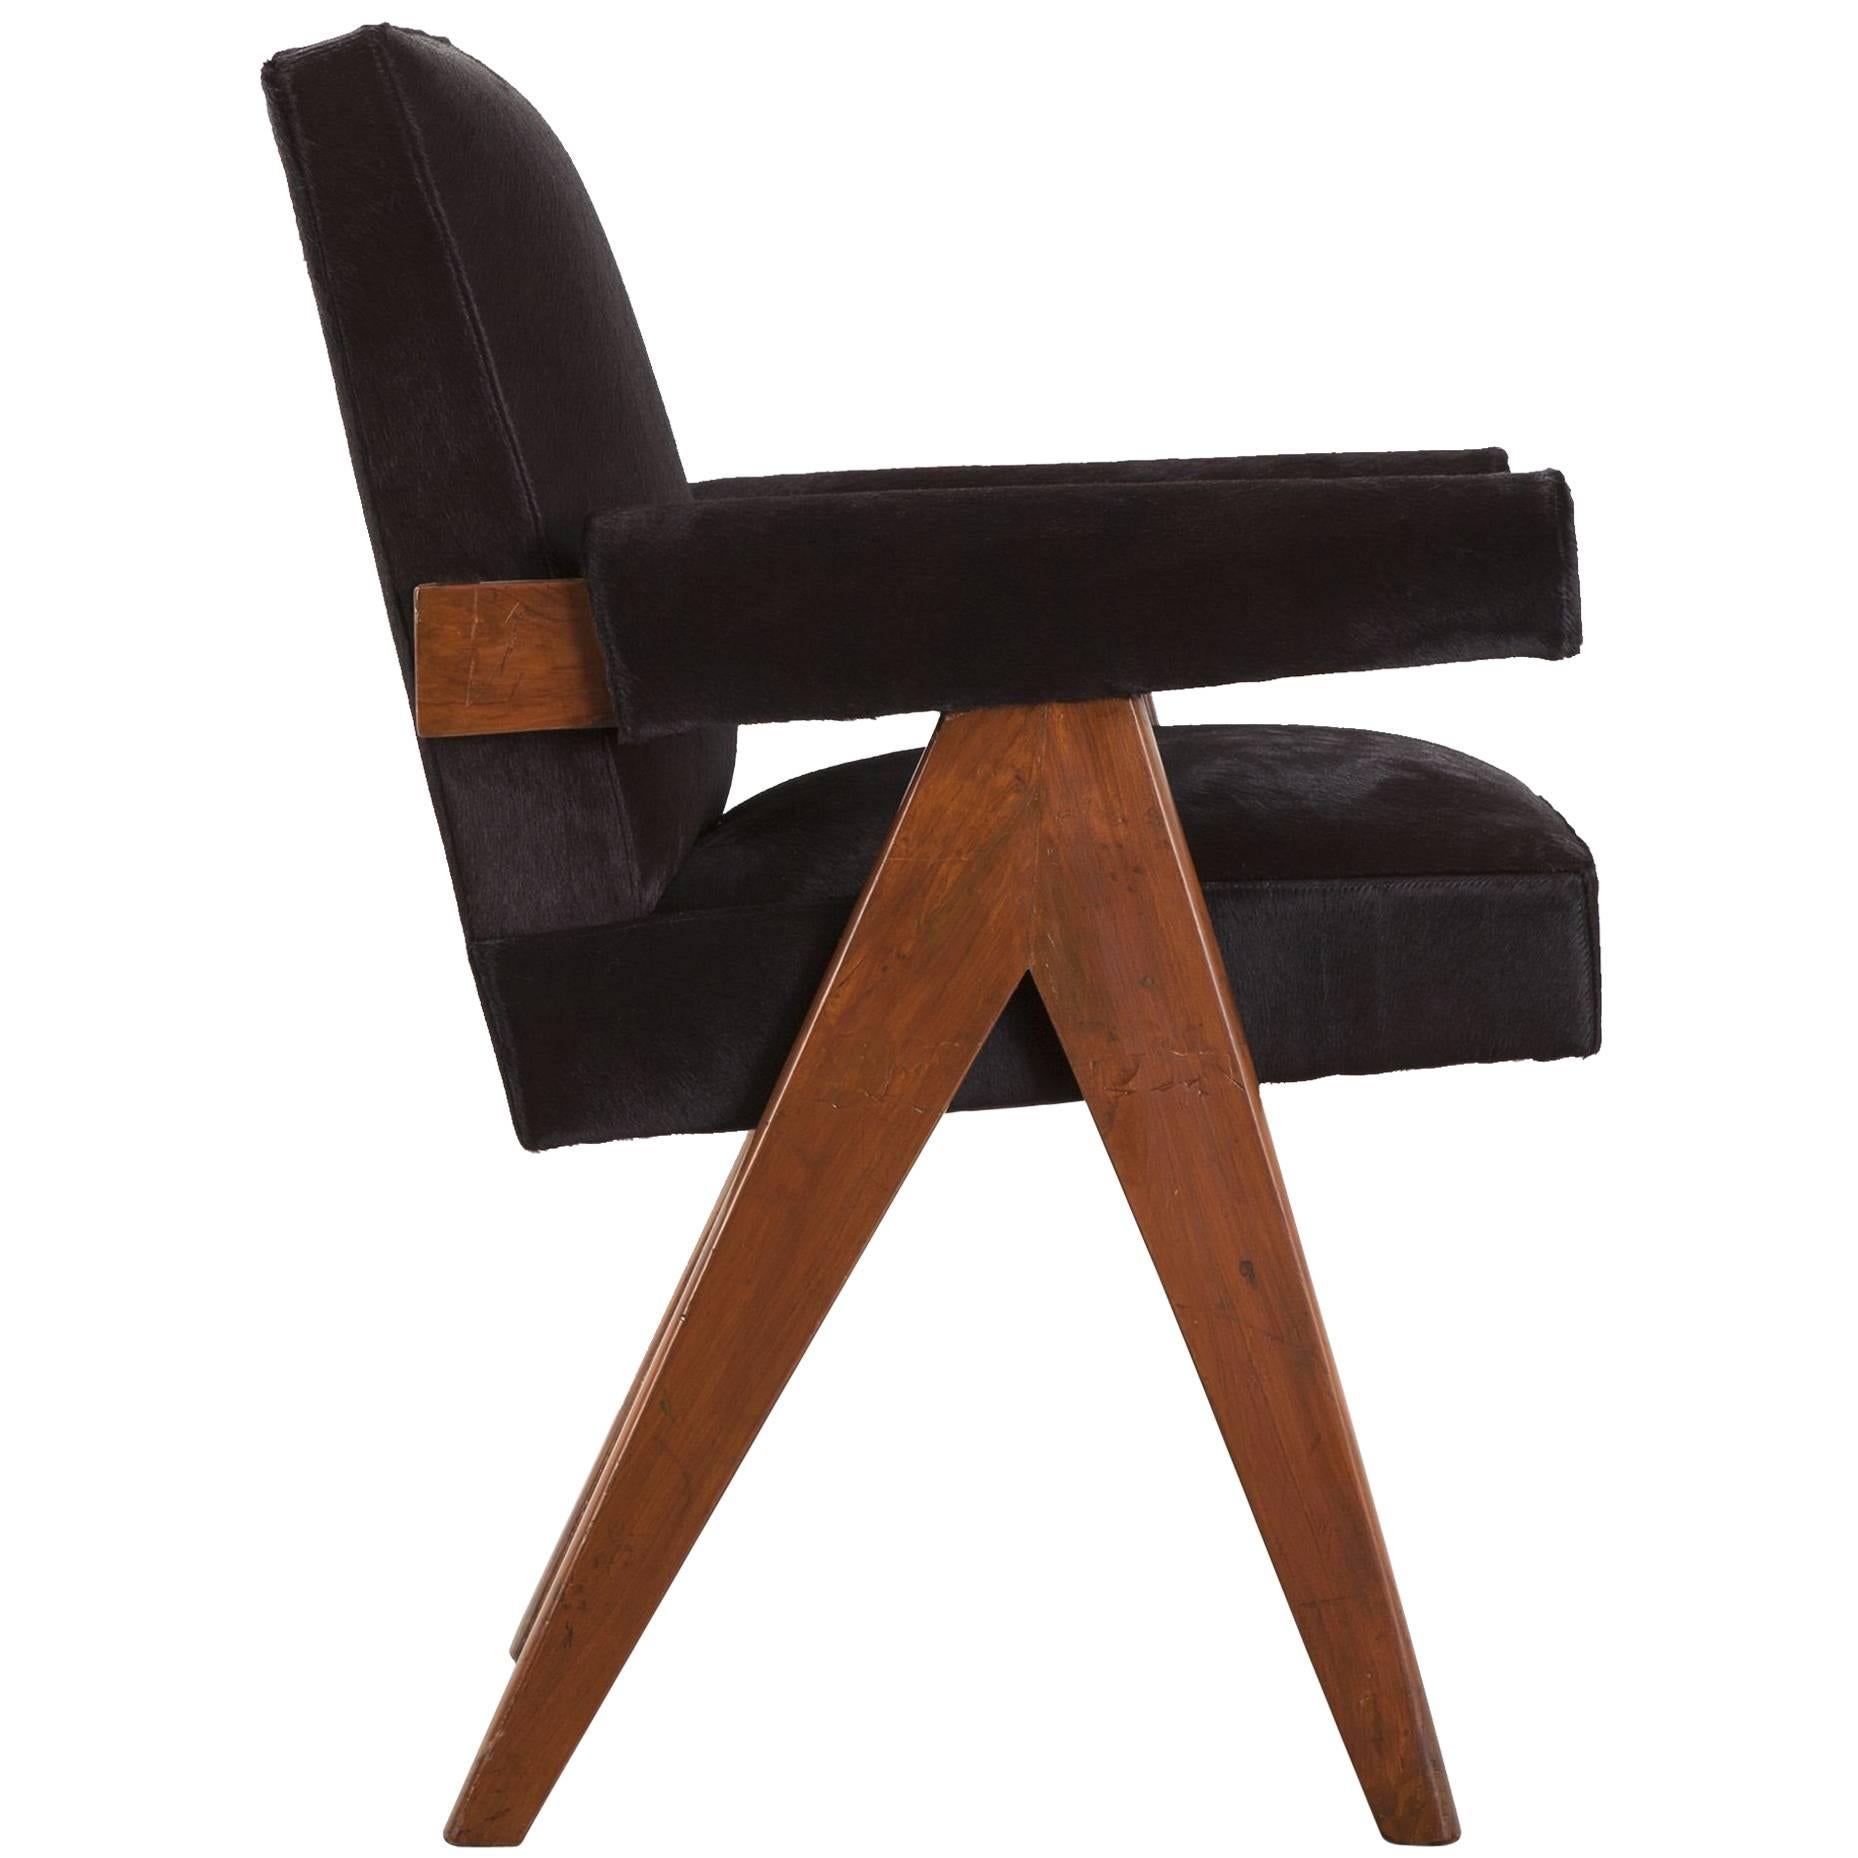 Pierre Jeanneret, "Office Chair", circa 1959-1960